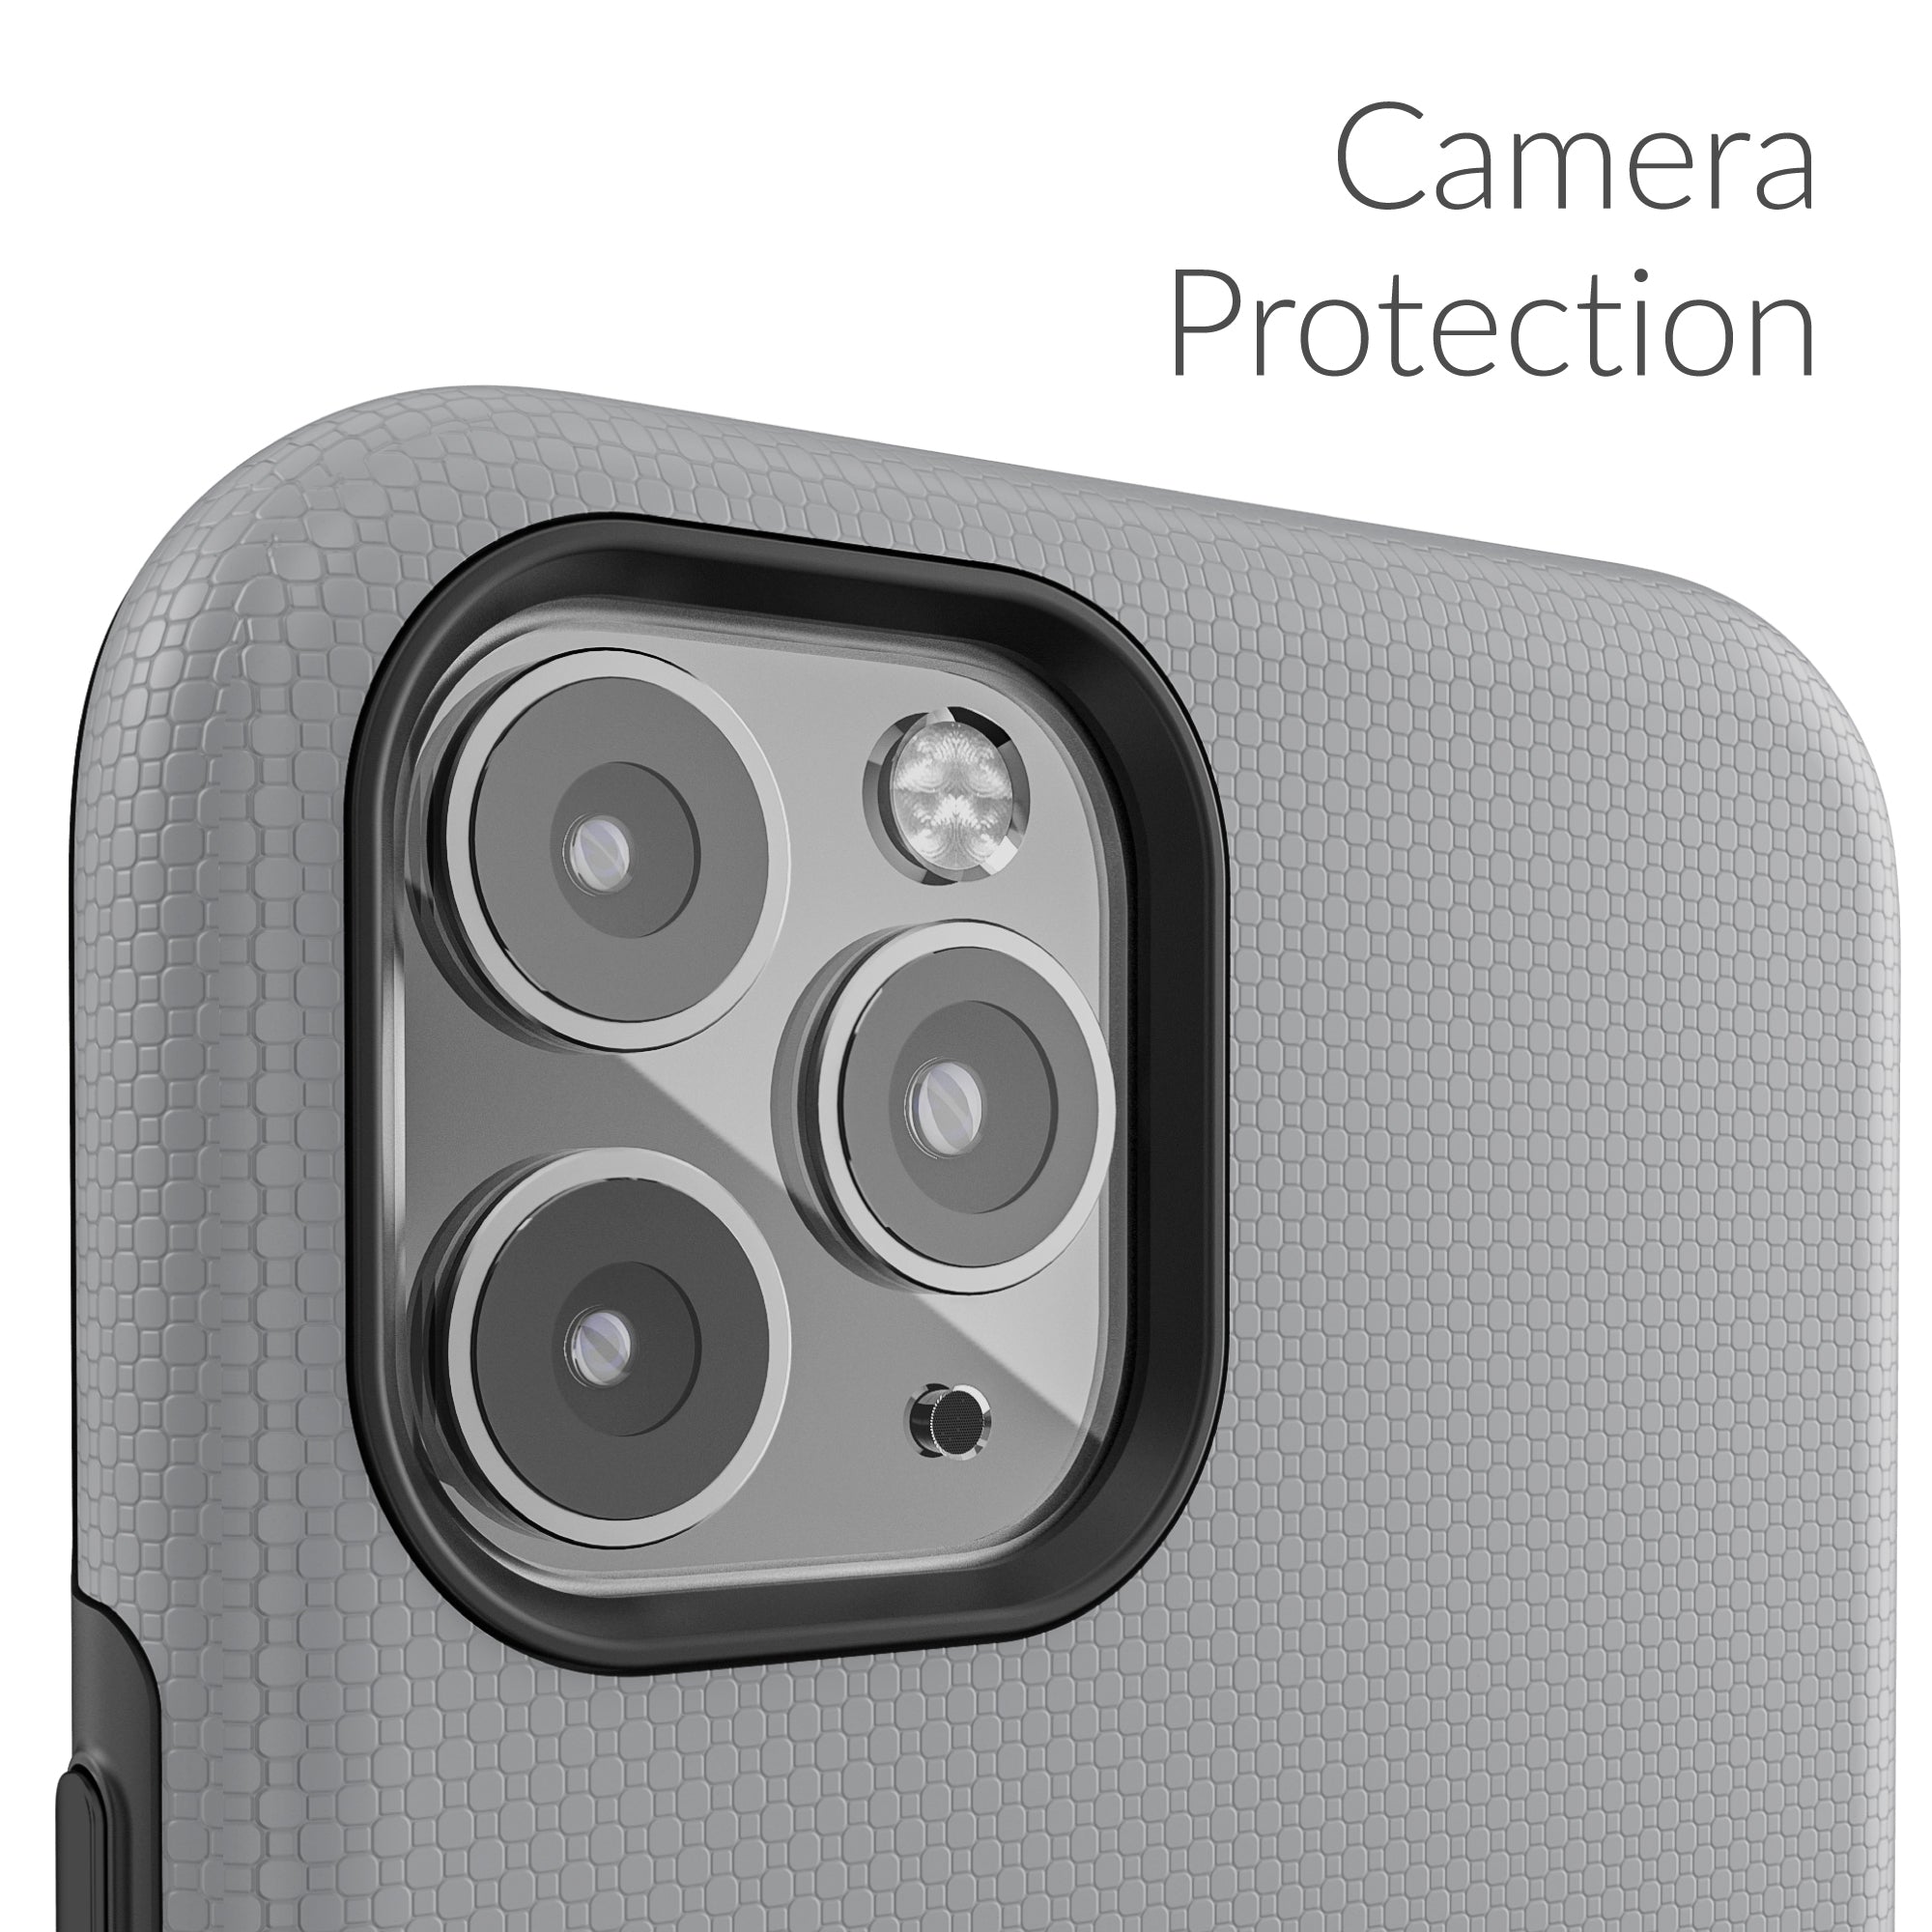 iPhone 11 Pro Case Dual Guard